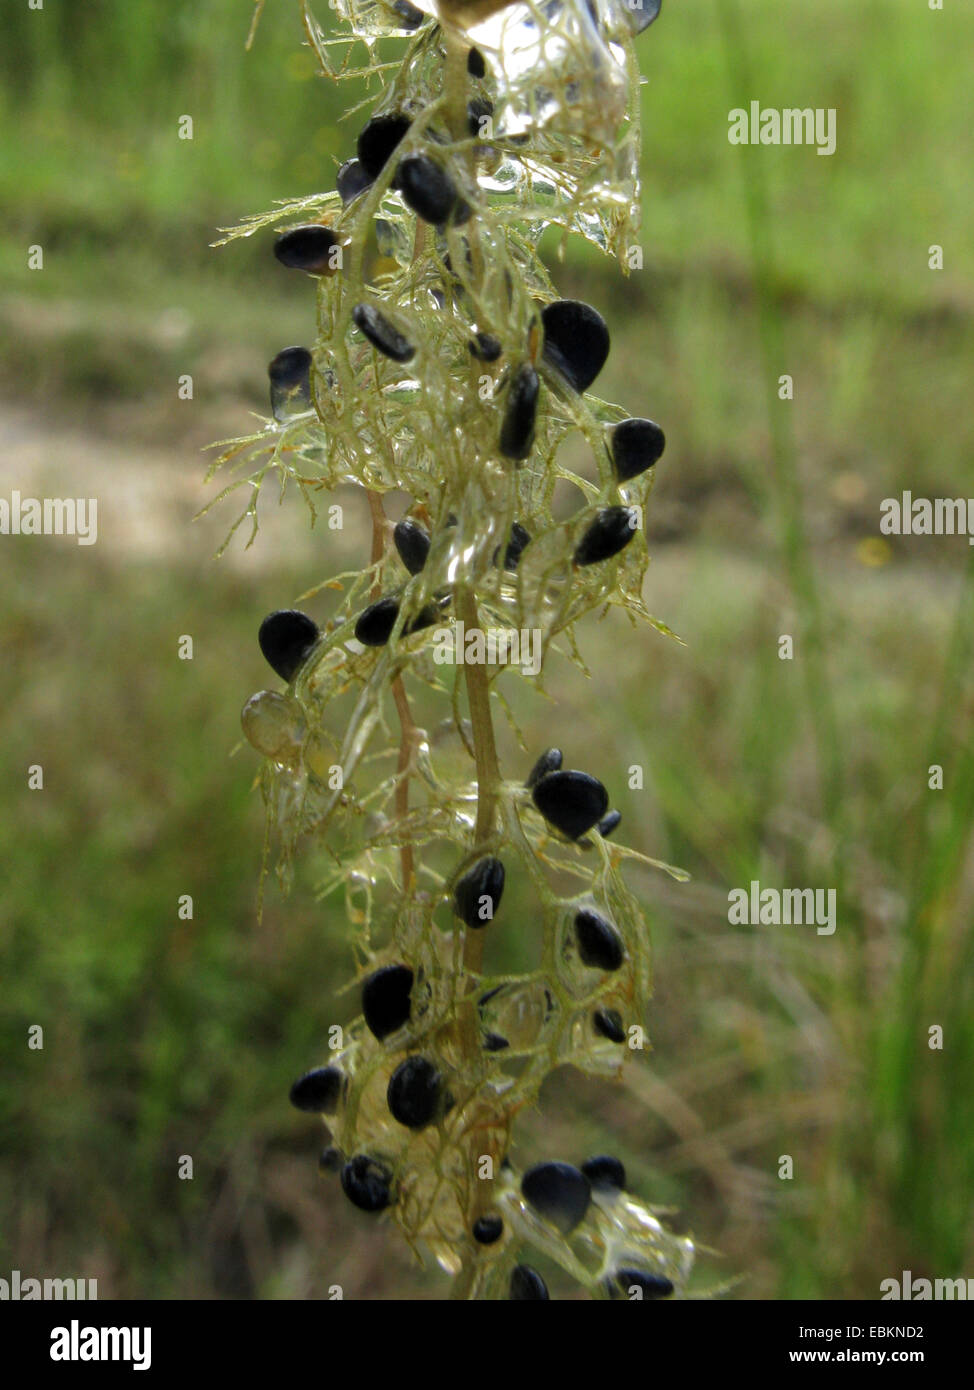 western bladderwort (Utricularia australis), plant with filled traps, Germany, North Rhine-Westphalia Stock Photo